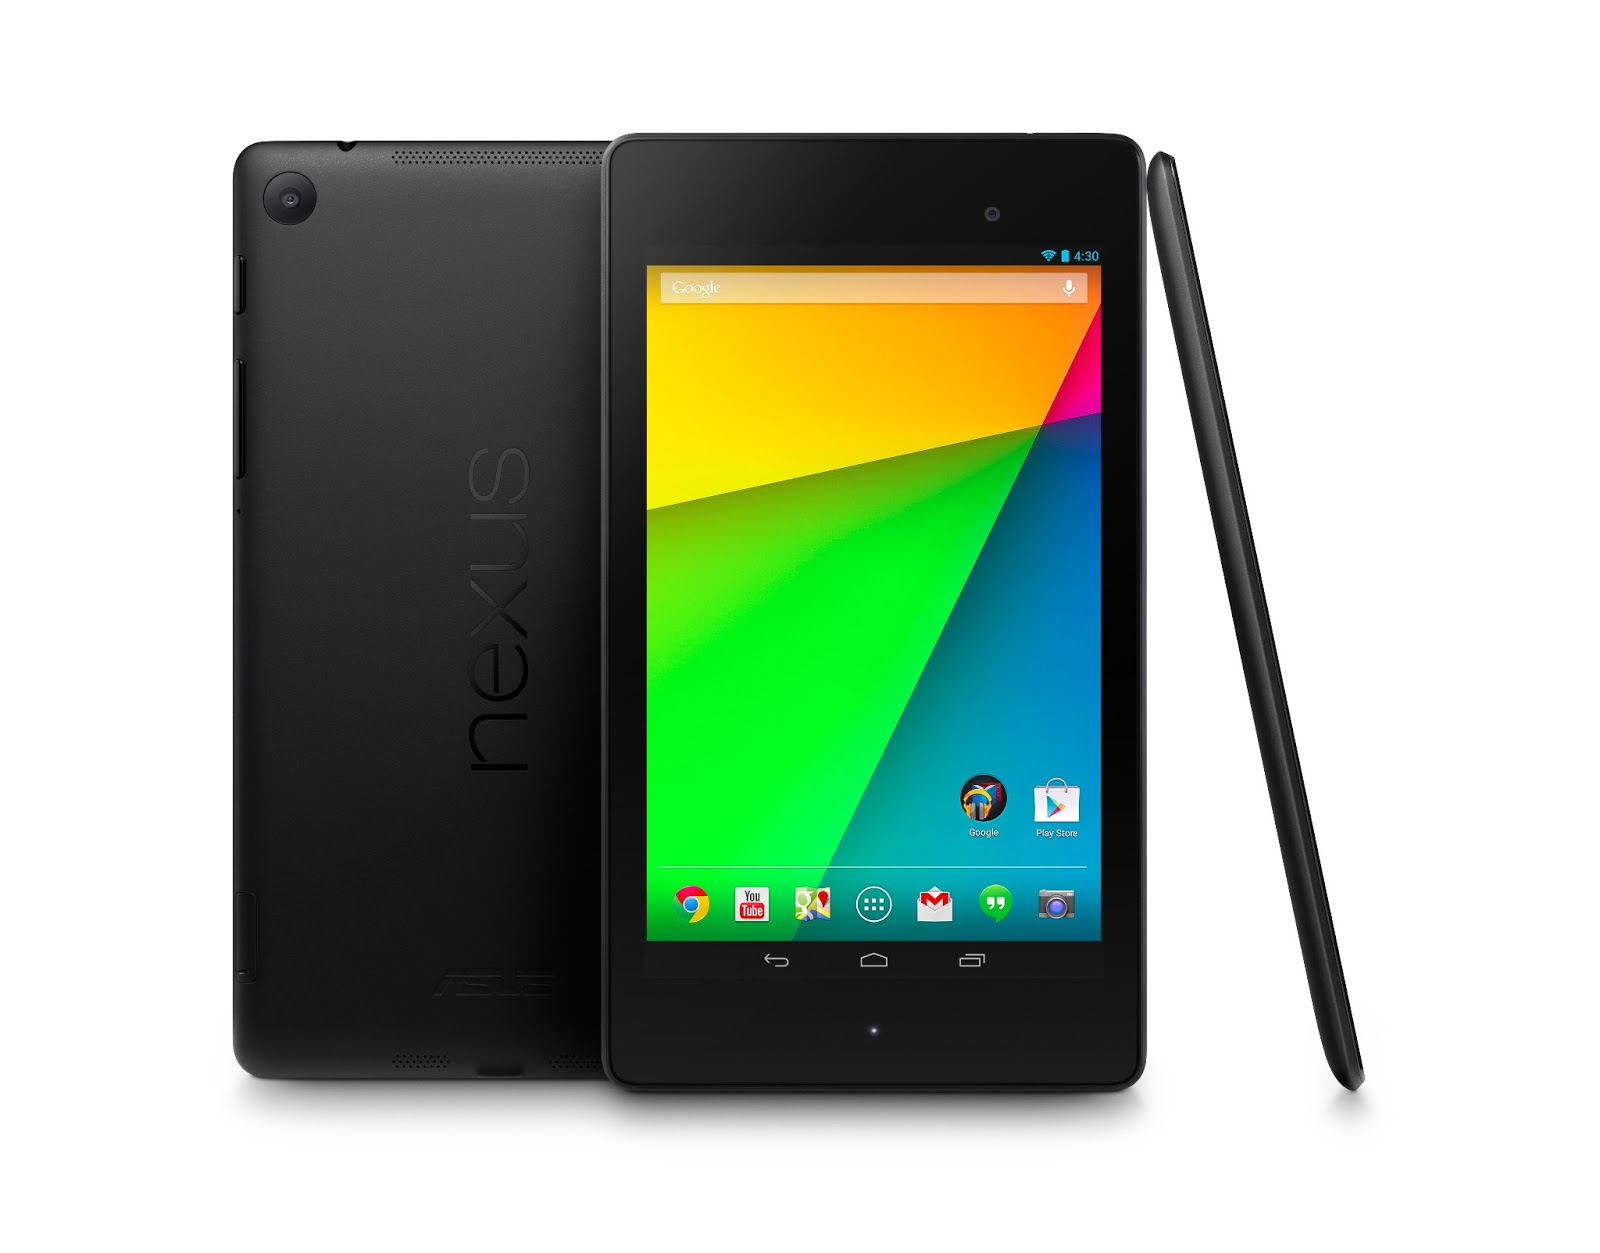 Are The New Nexus 7 Improvements Enough to Dethrone the iPad mini?